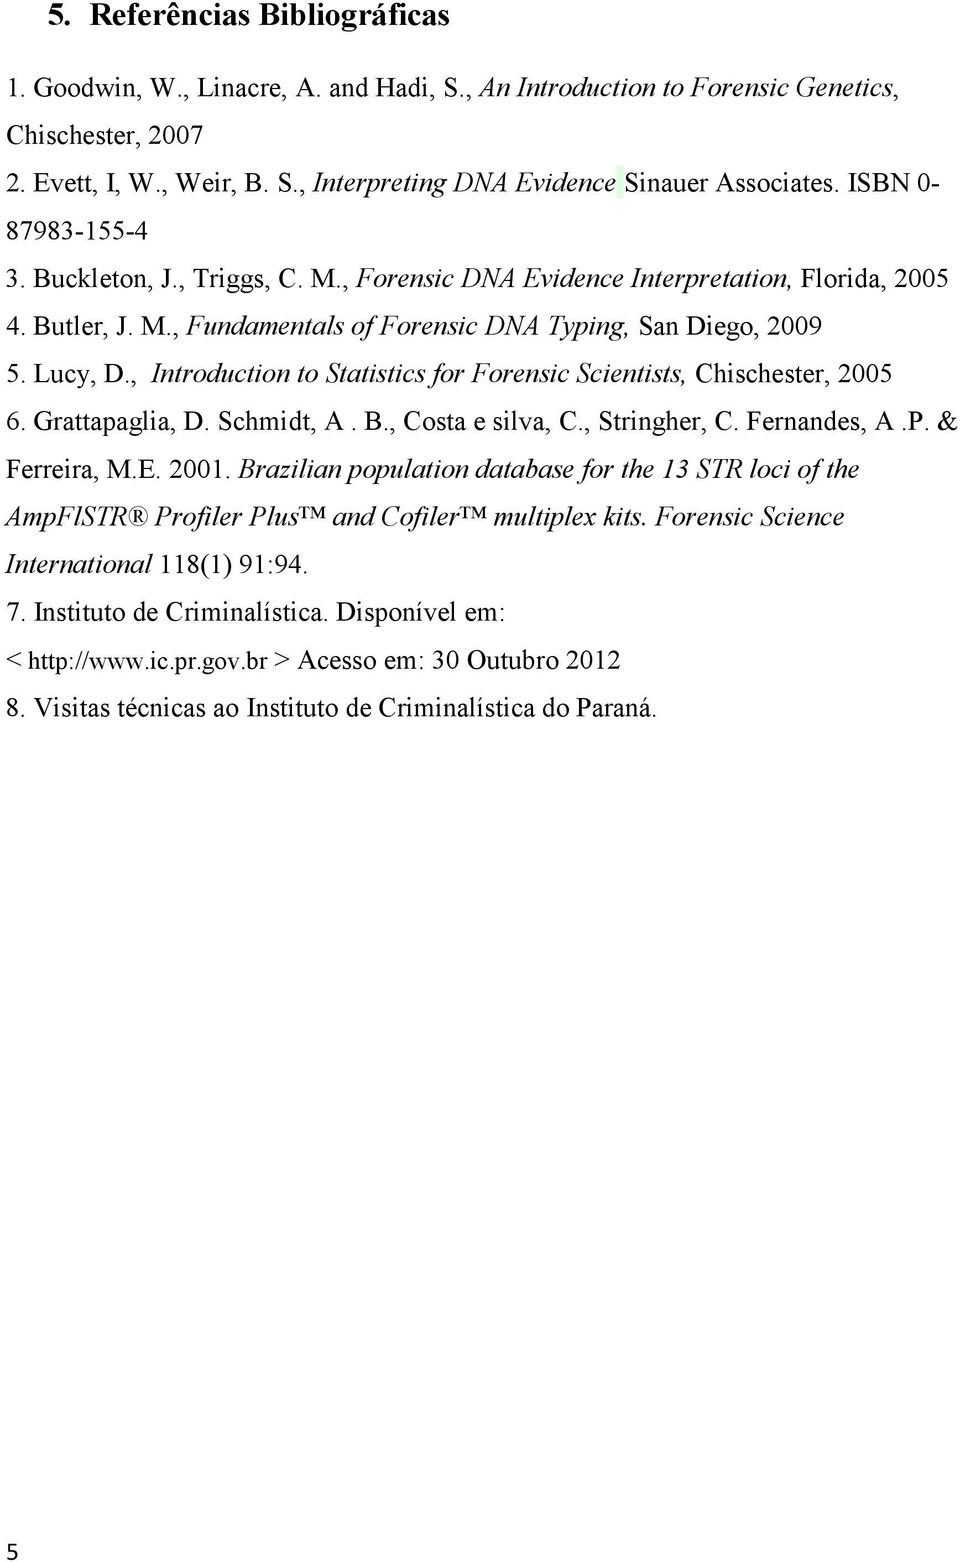 , Introduction to Statistics for Forensic Scientists, Chischester, 2005 6. Grattapaglia, D. Schmidt, A. B., Costa e silva, C., Stringher, C. Fernandes, A.P. & Ferreira, M.E. 2001.